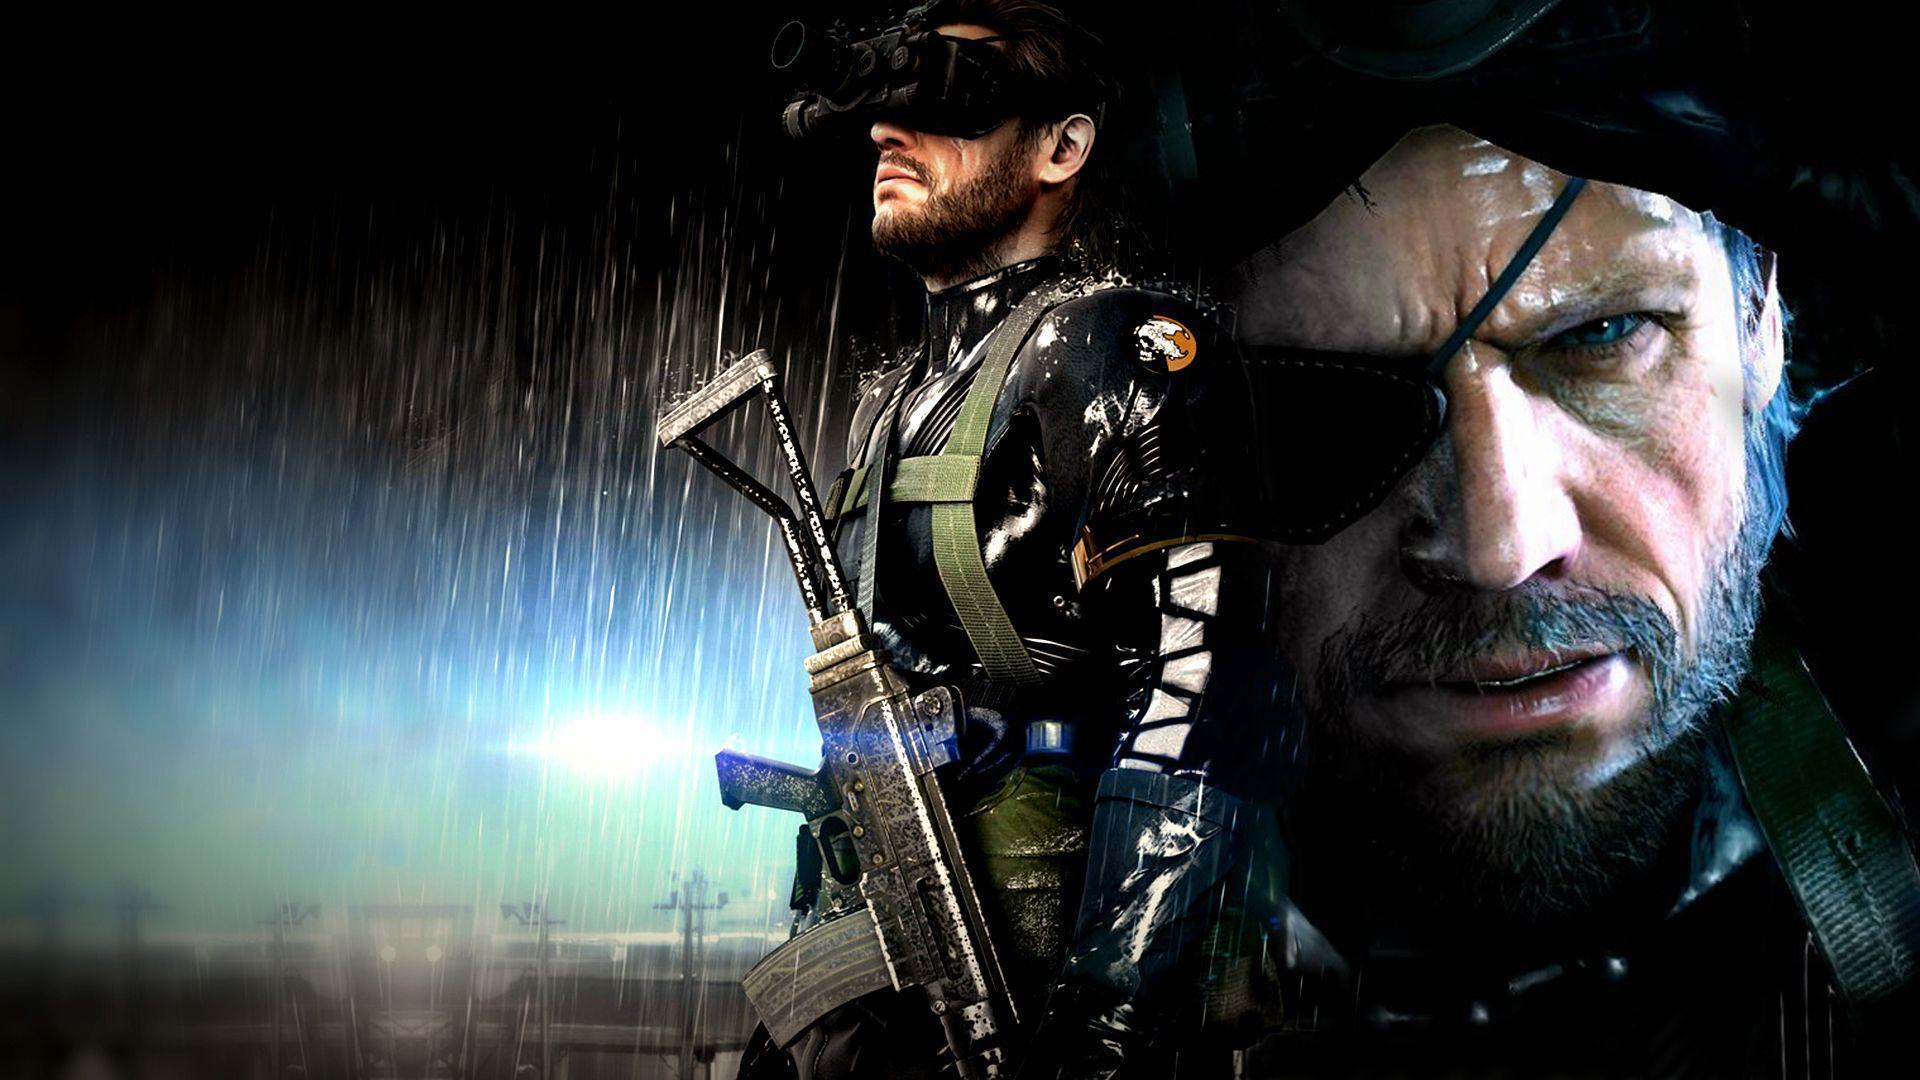 Metal Gear Solid V: The Phantom Pain Wallpaper HD Download